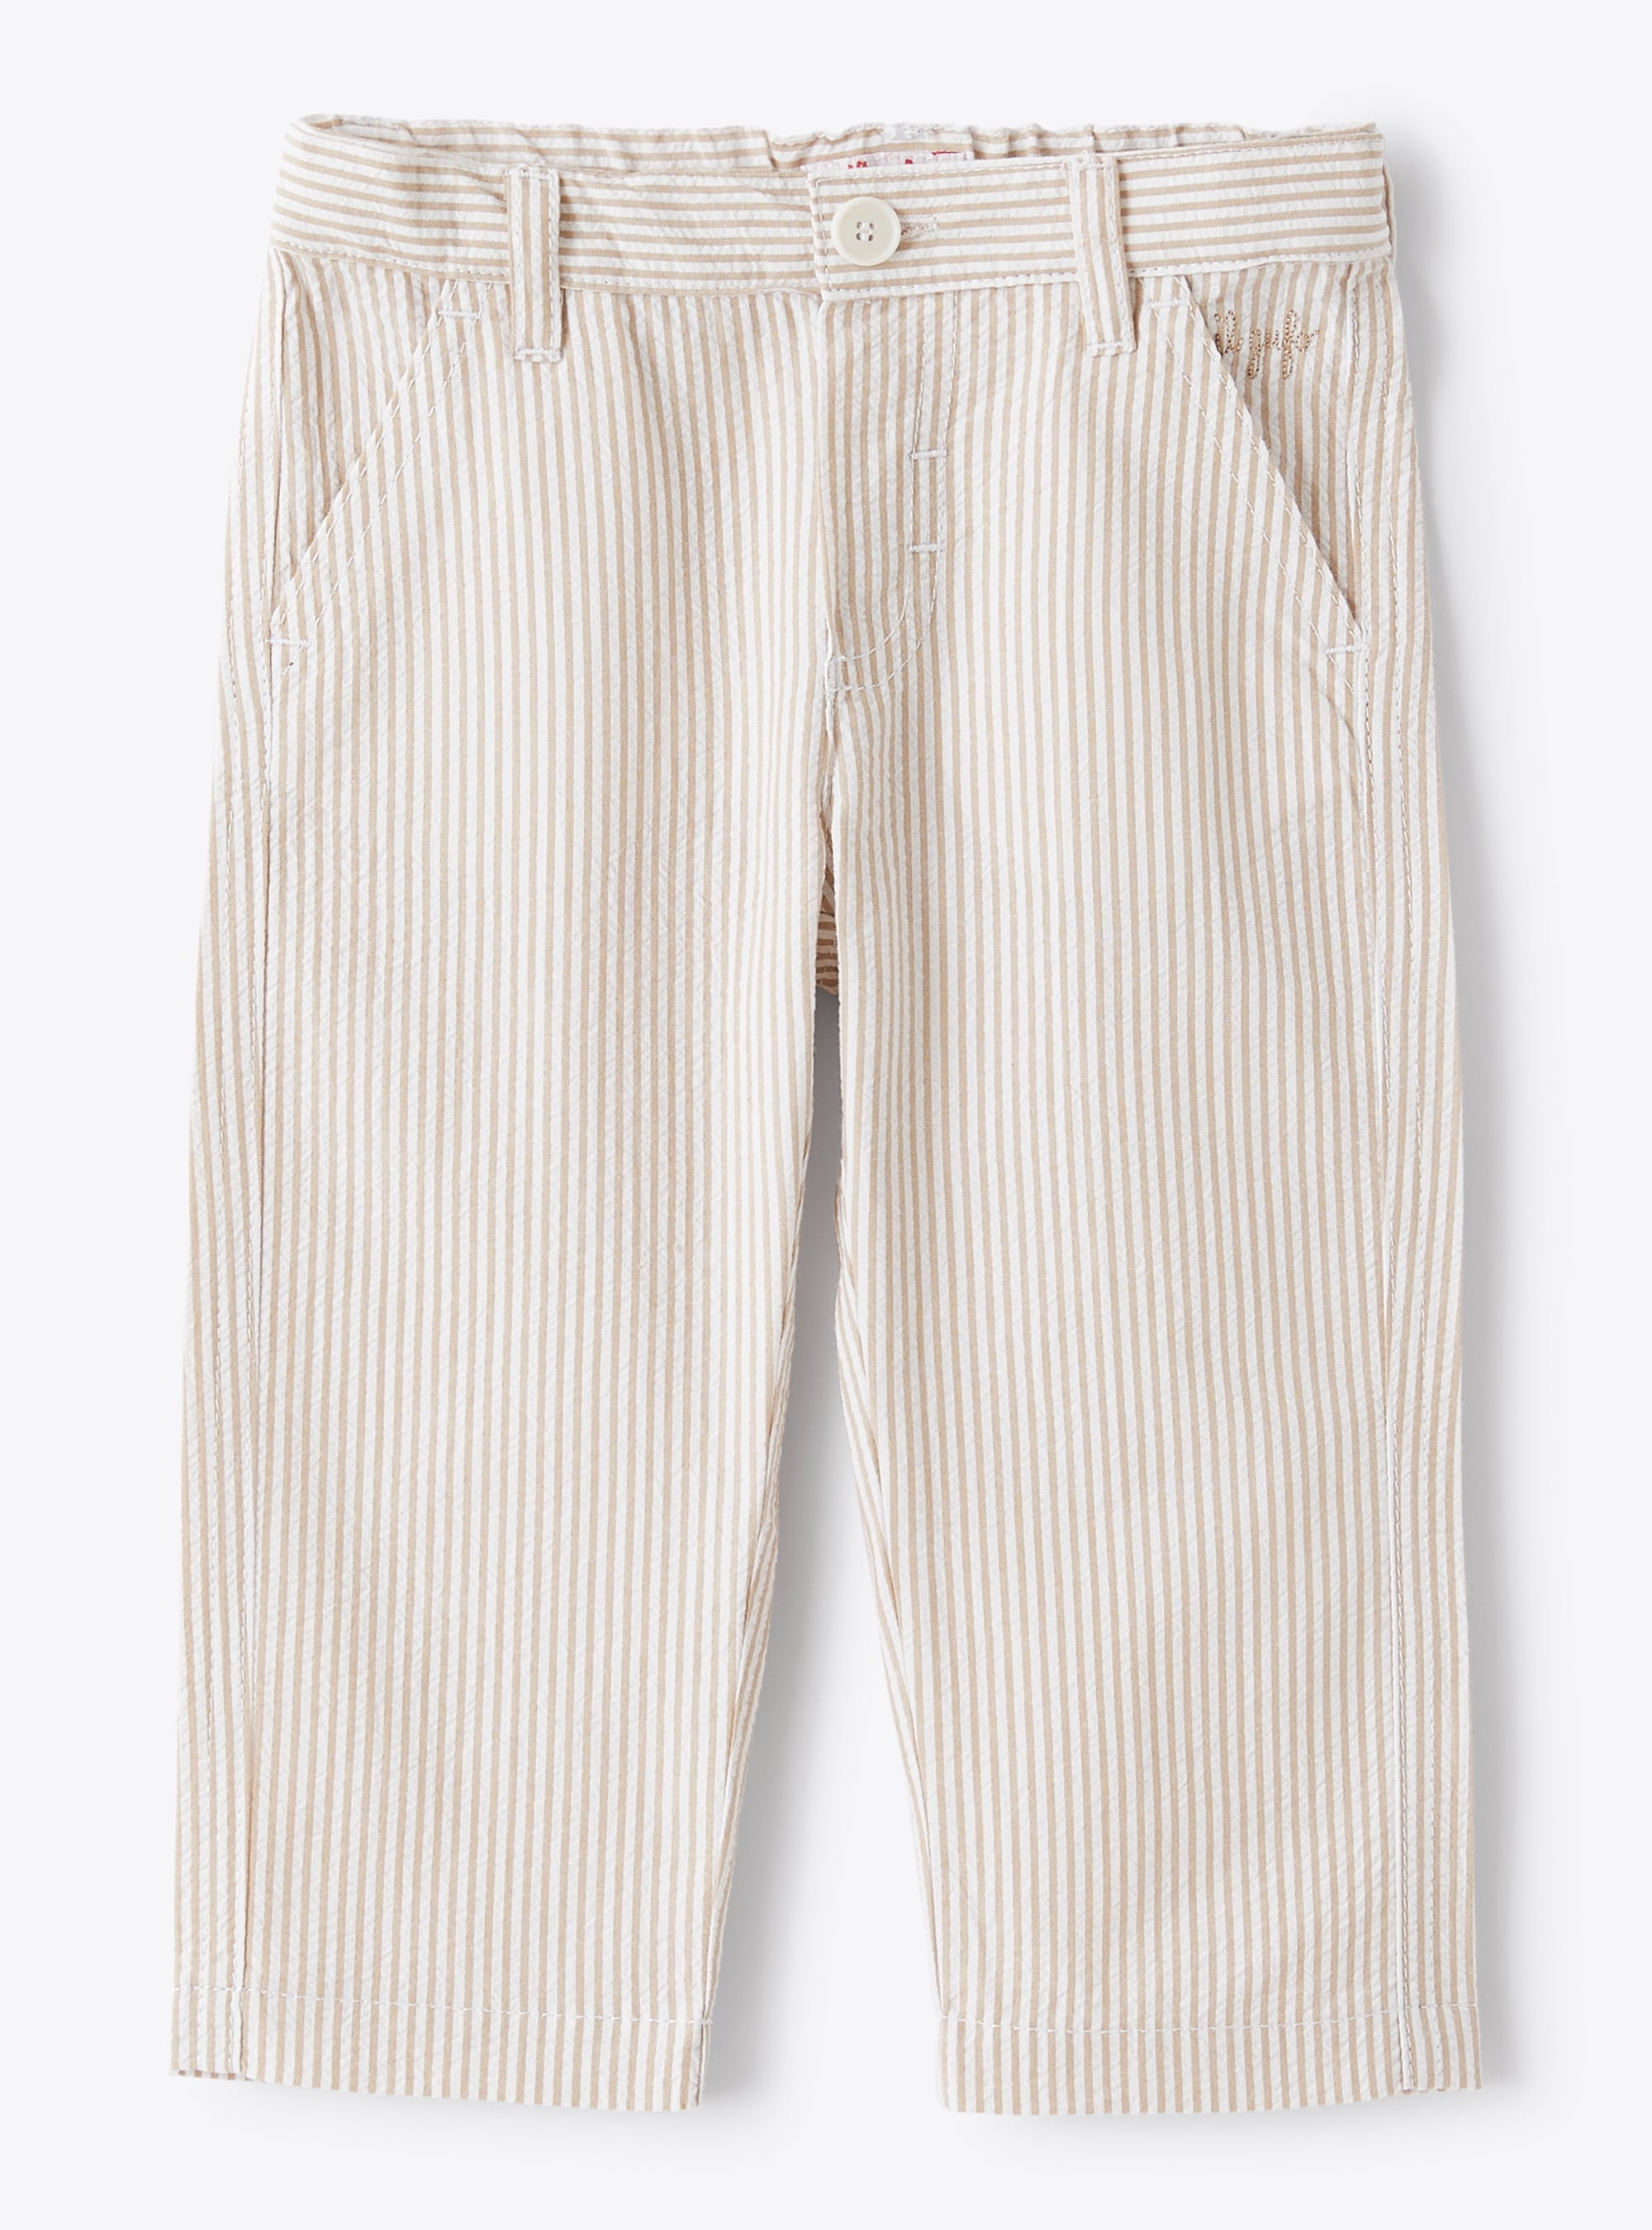 Pantaloni in seersucker beige - Pantaloni - Il Gufo